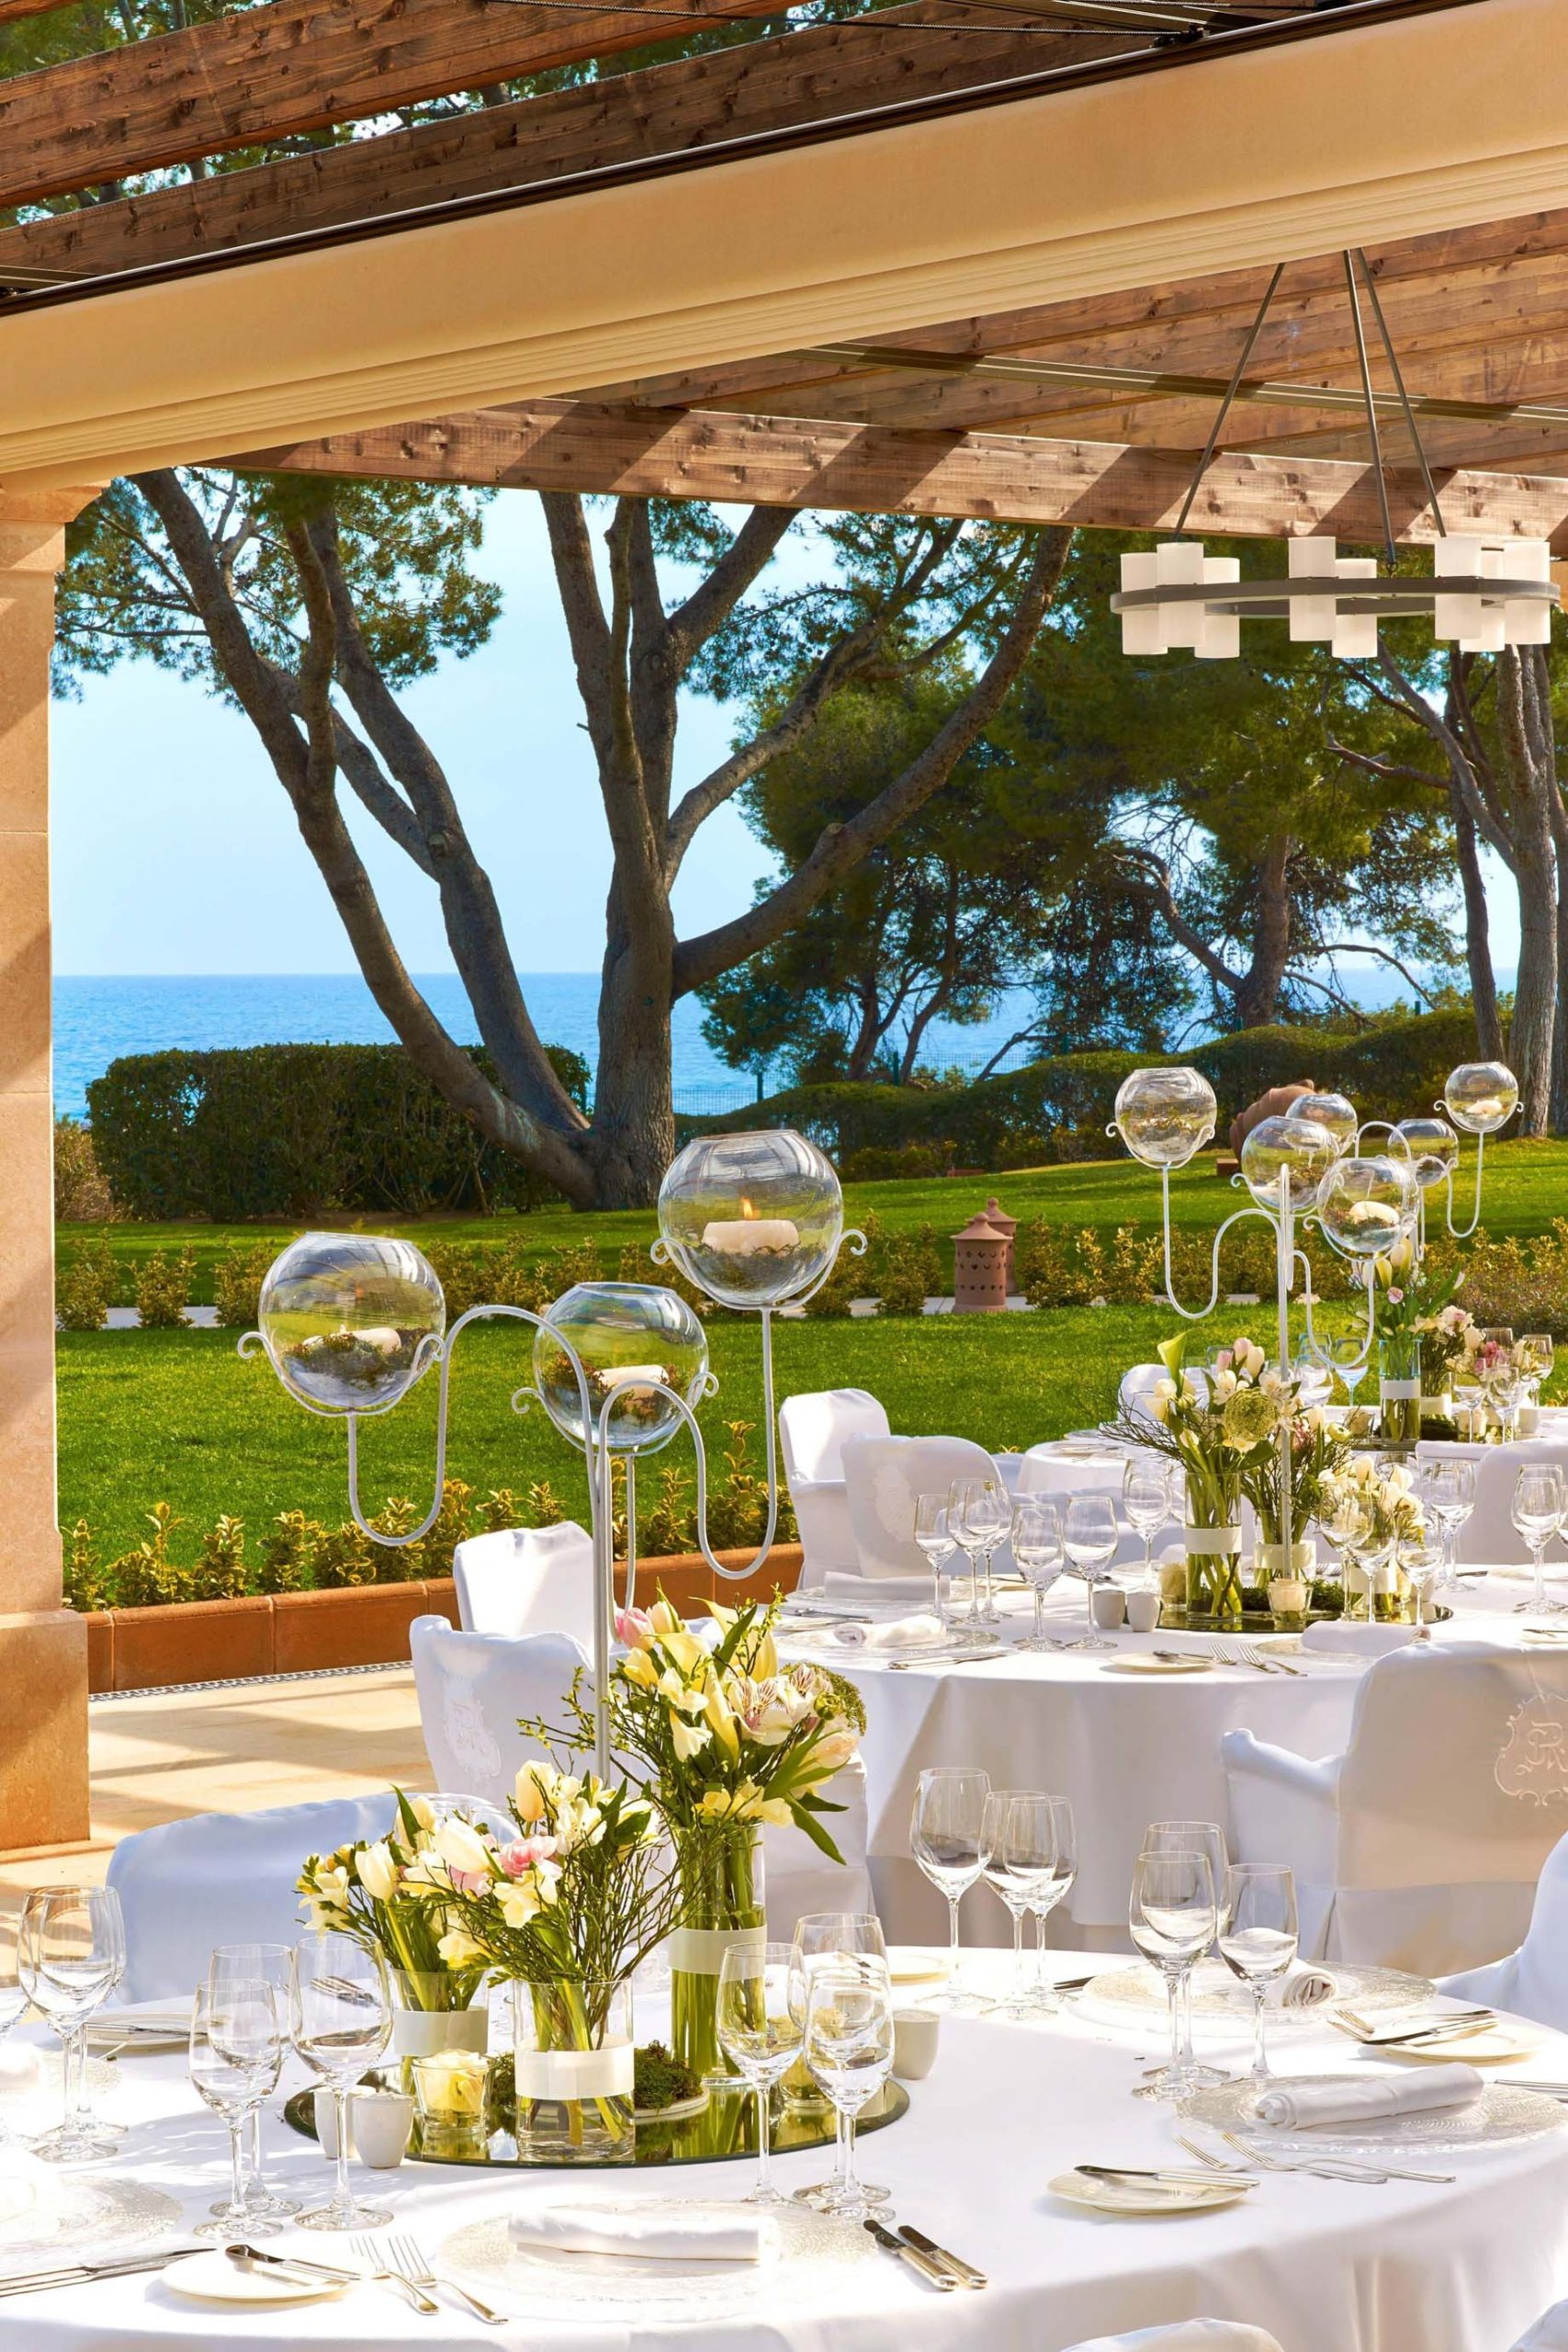 The St. Regis Mardavall Mallorca Resort – Palma de Mallorca, Spain – Ponent Terrace Table Setting